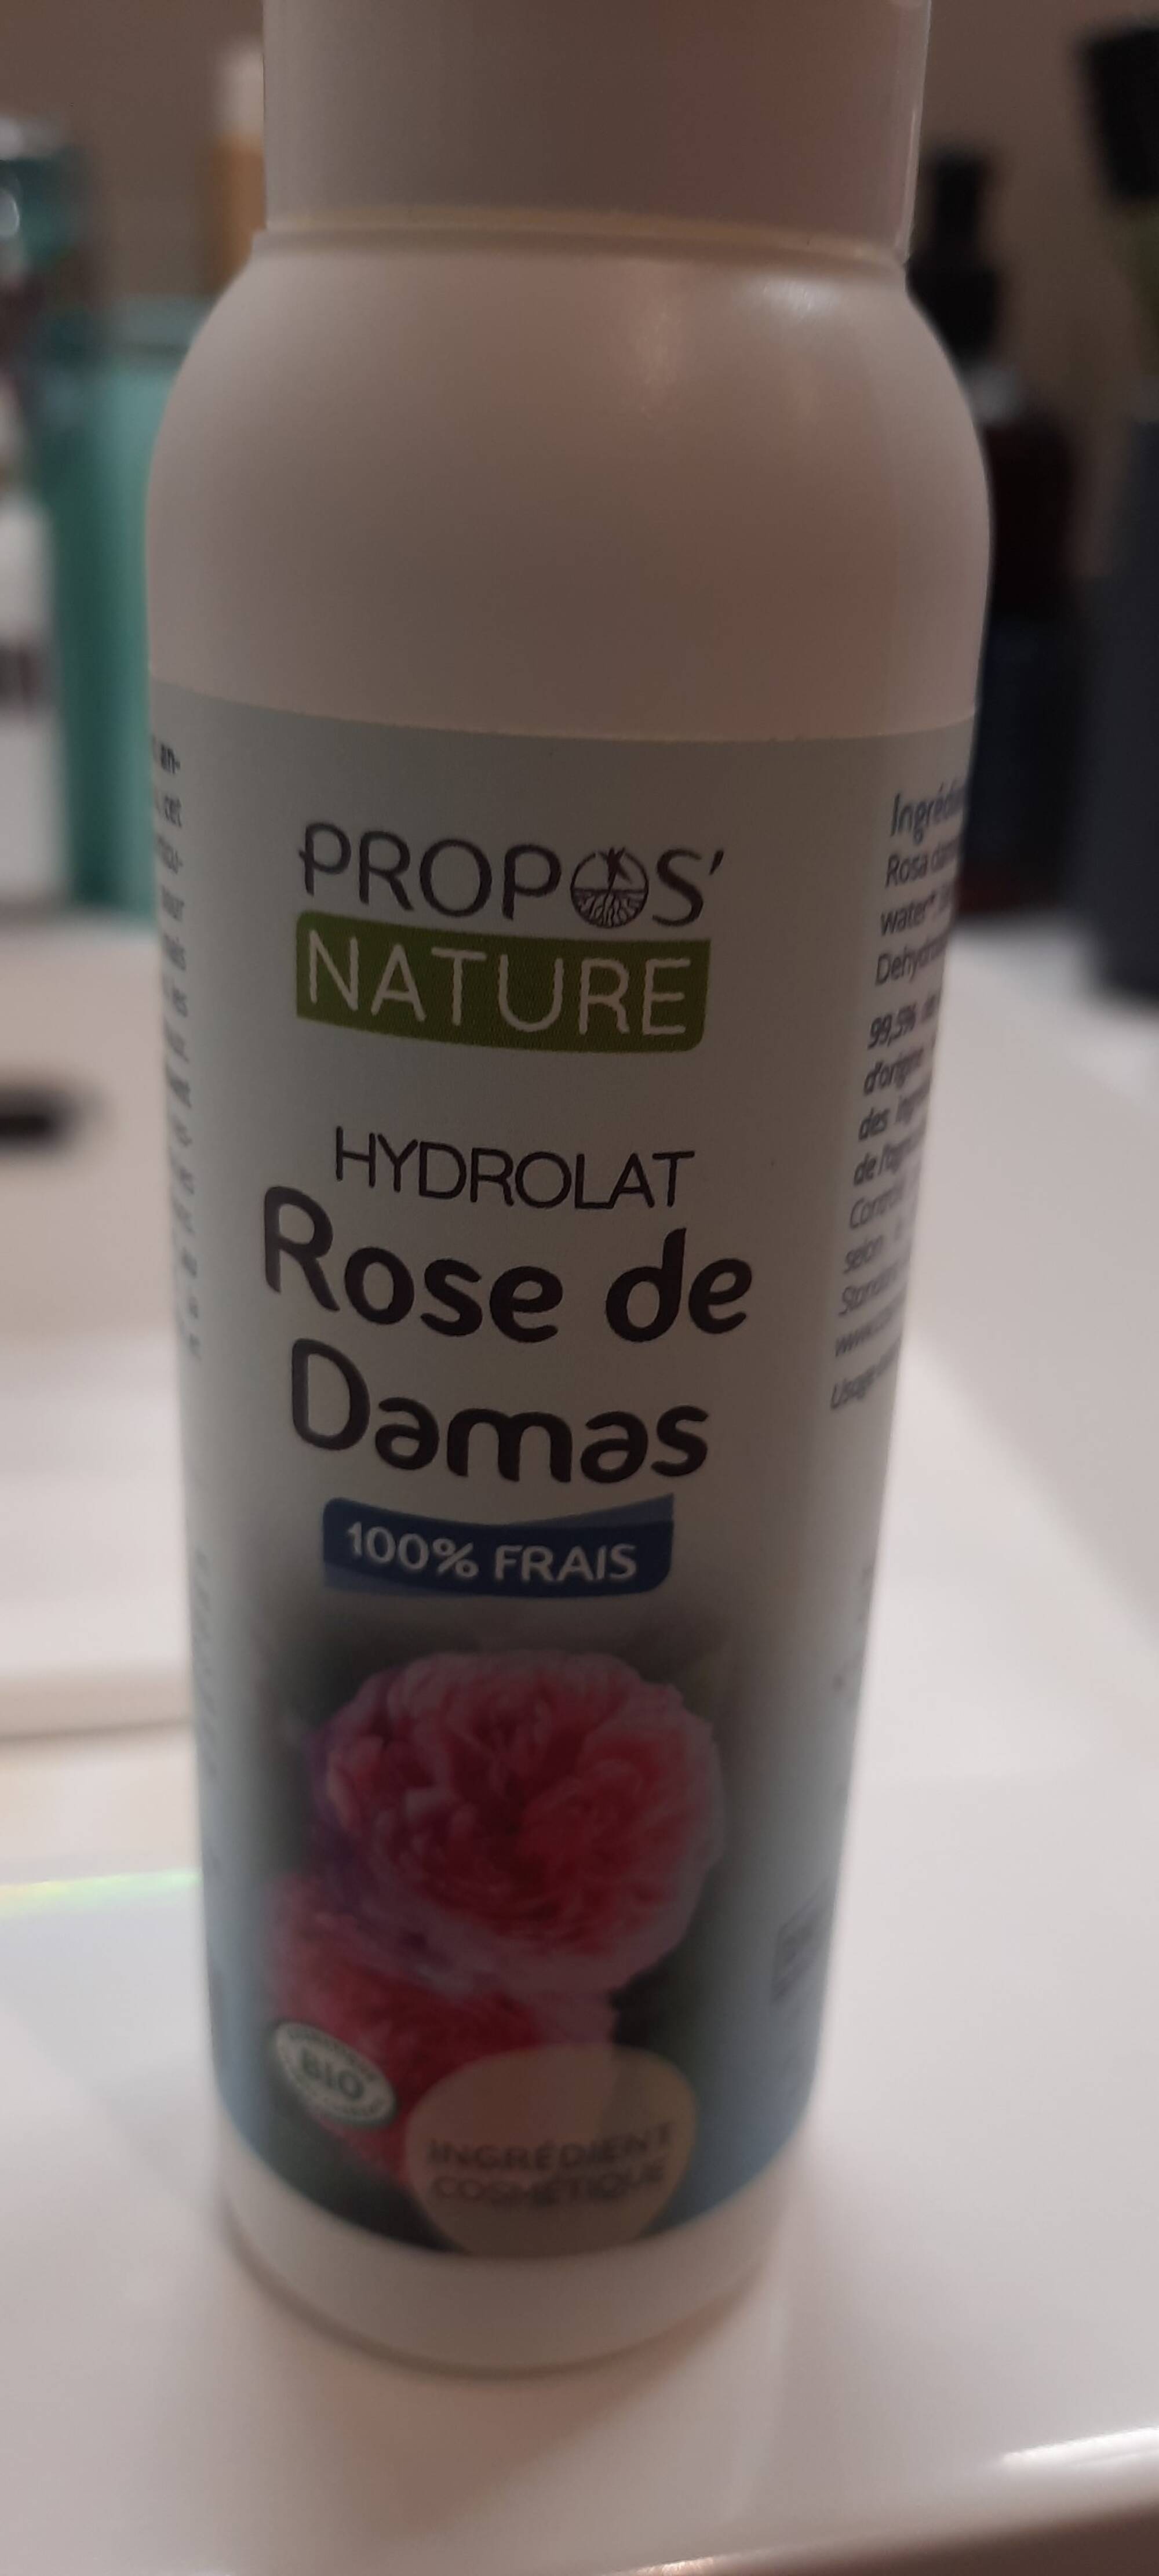 PROPOS'NATURE - Hydrolat rose de damas 100% frais